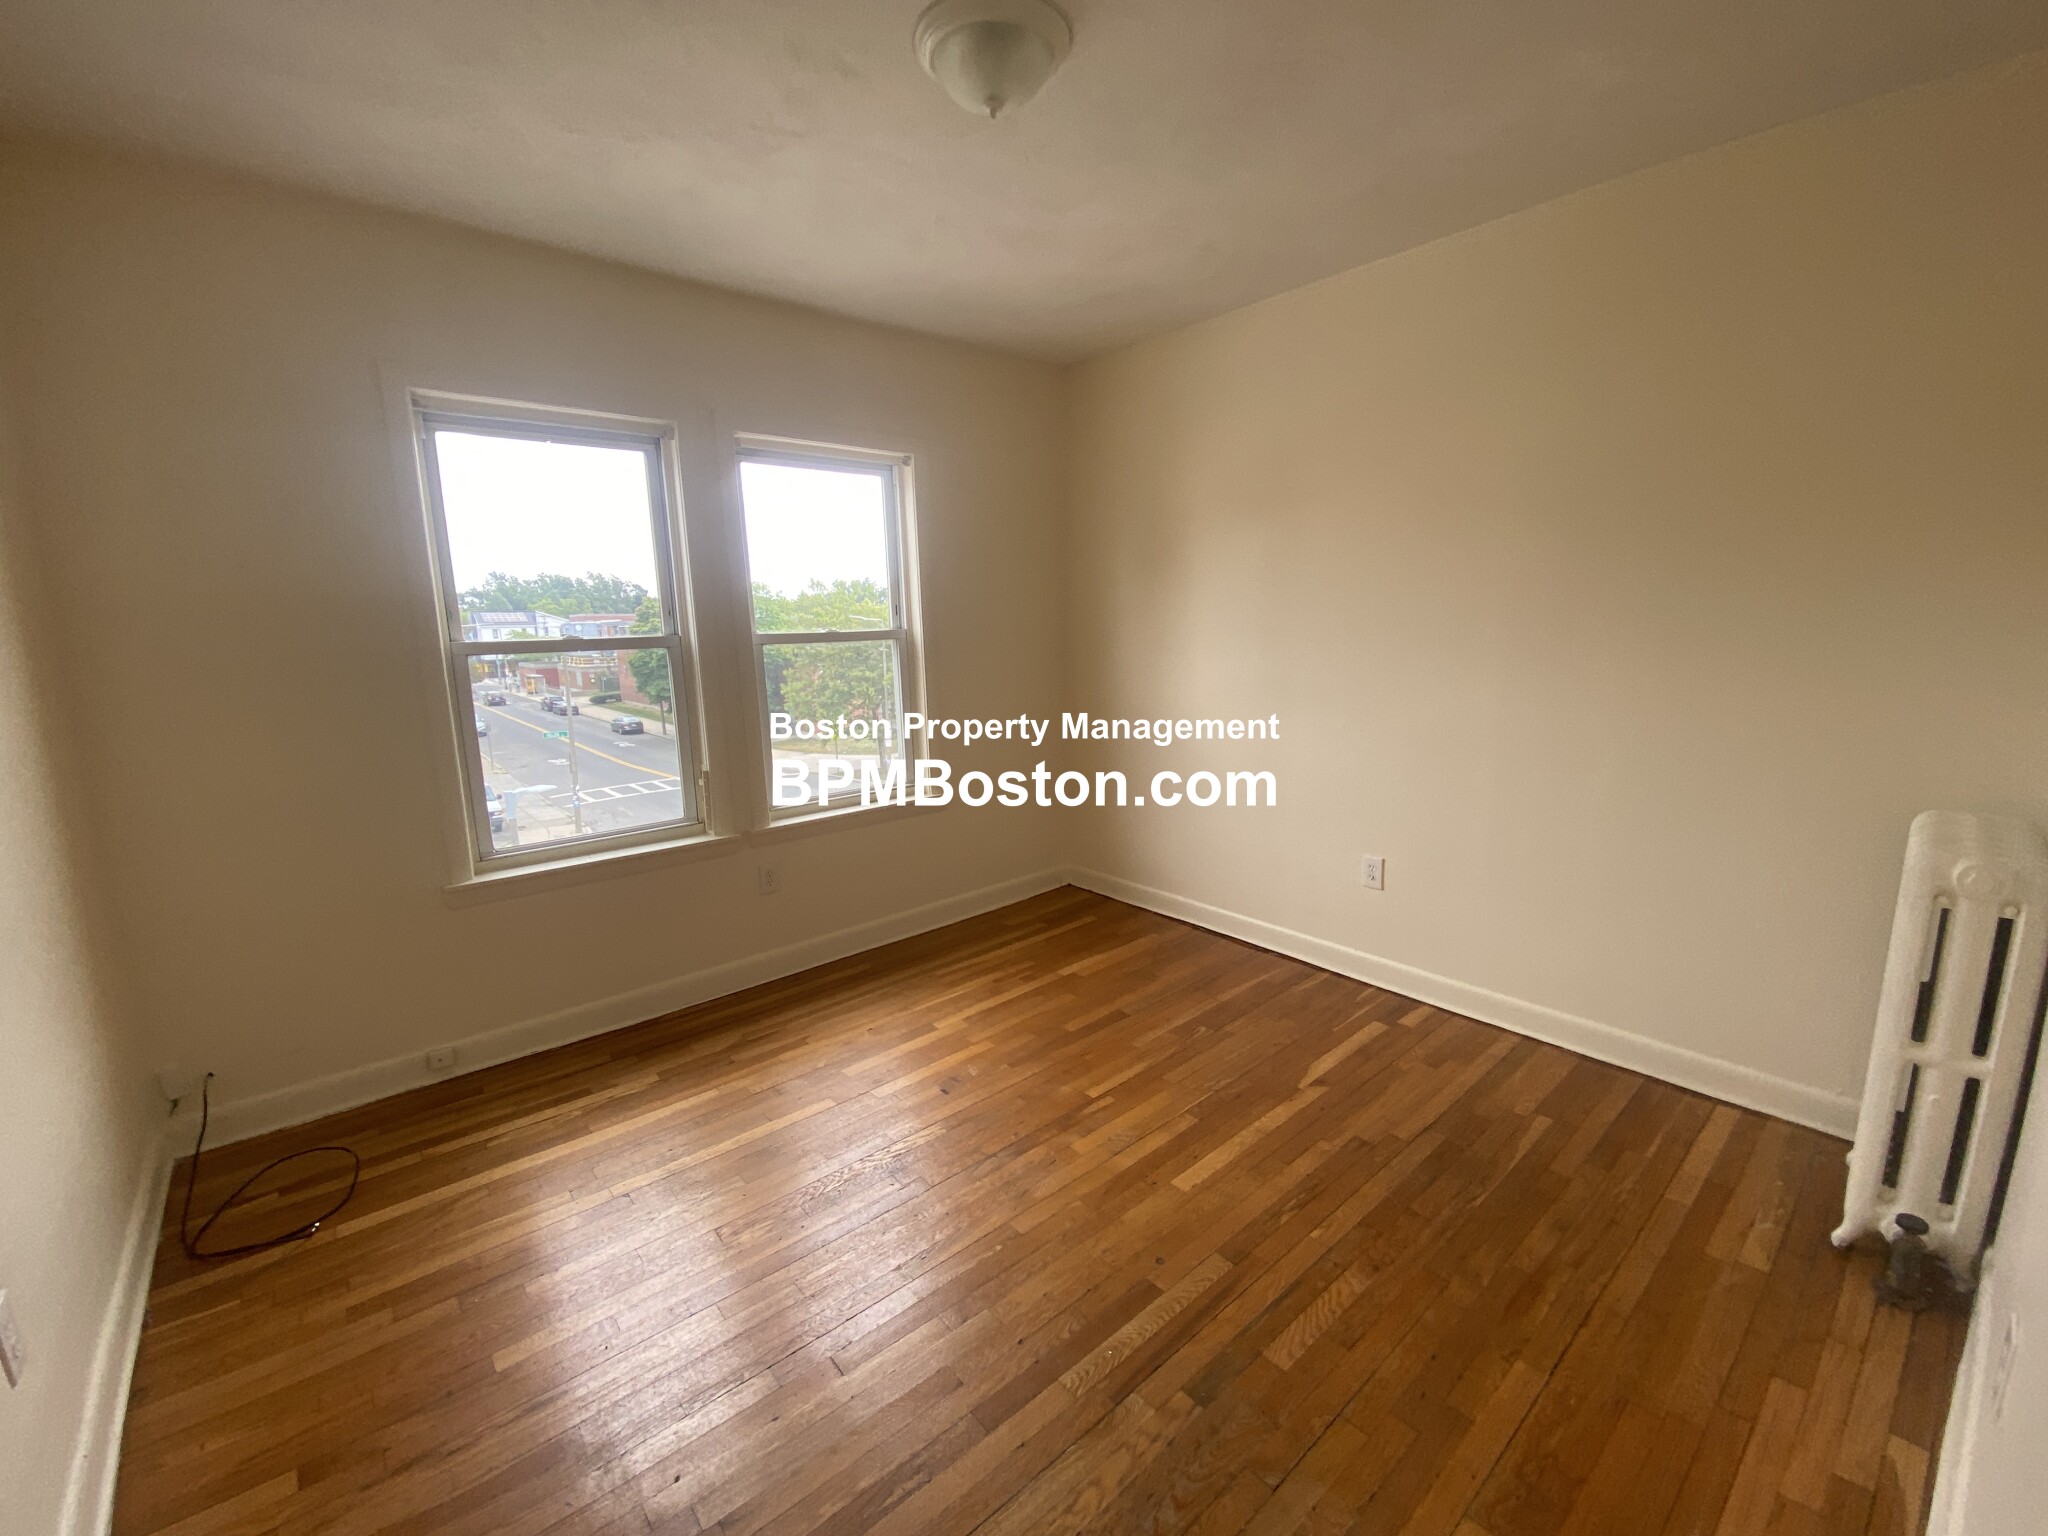 2 Beds, 1 Bath apartment in Boston, Dorchester for $2,400